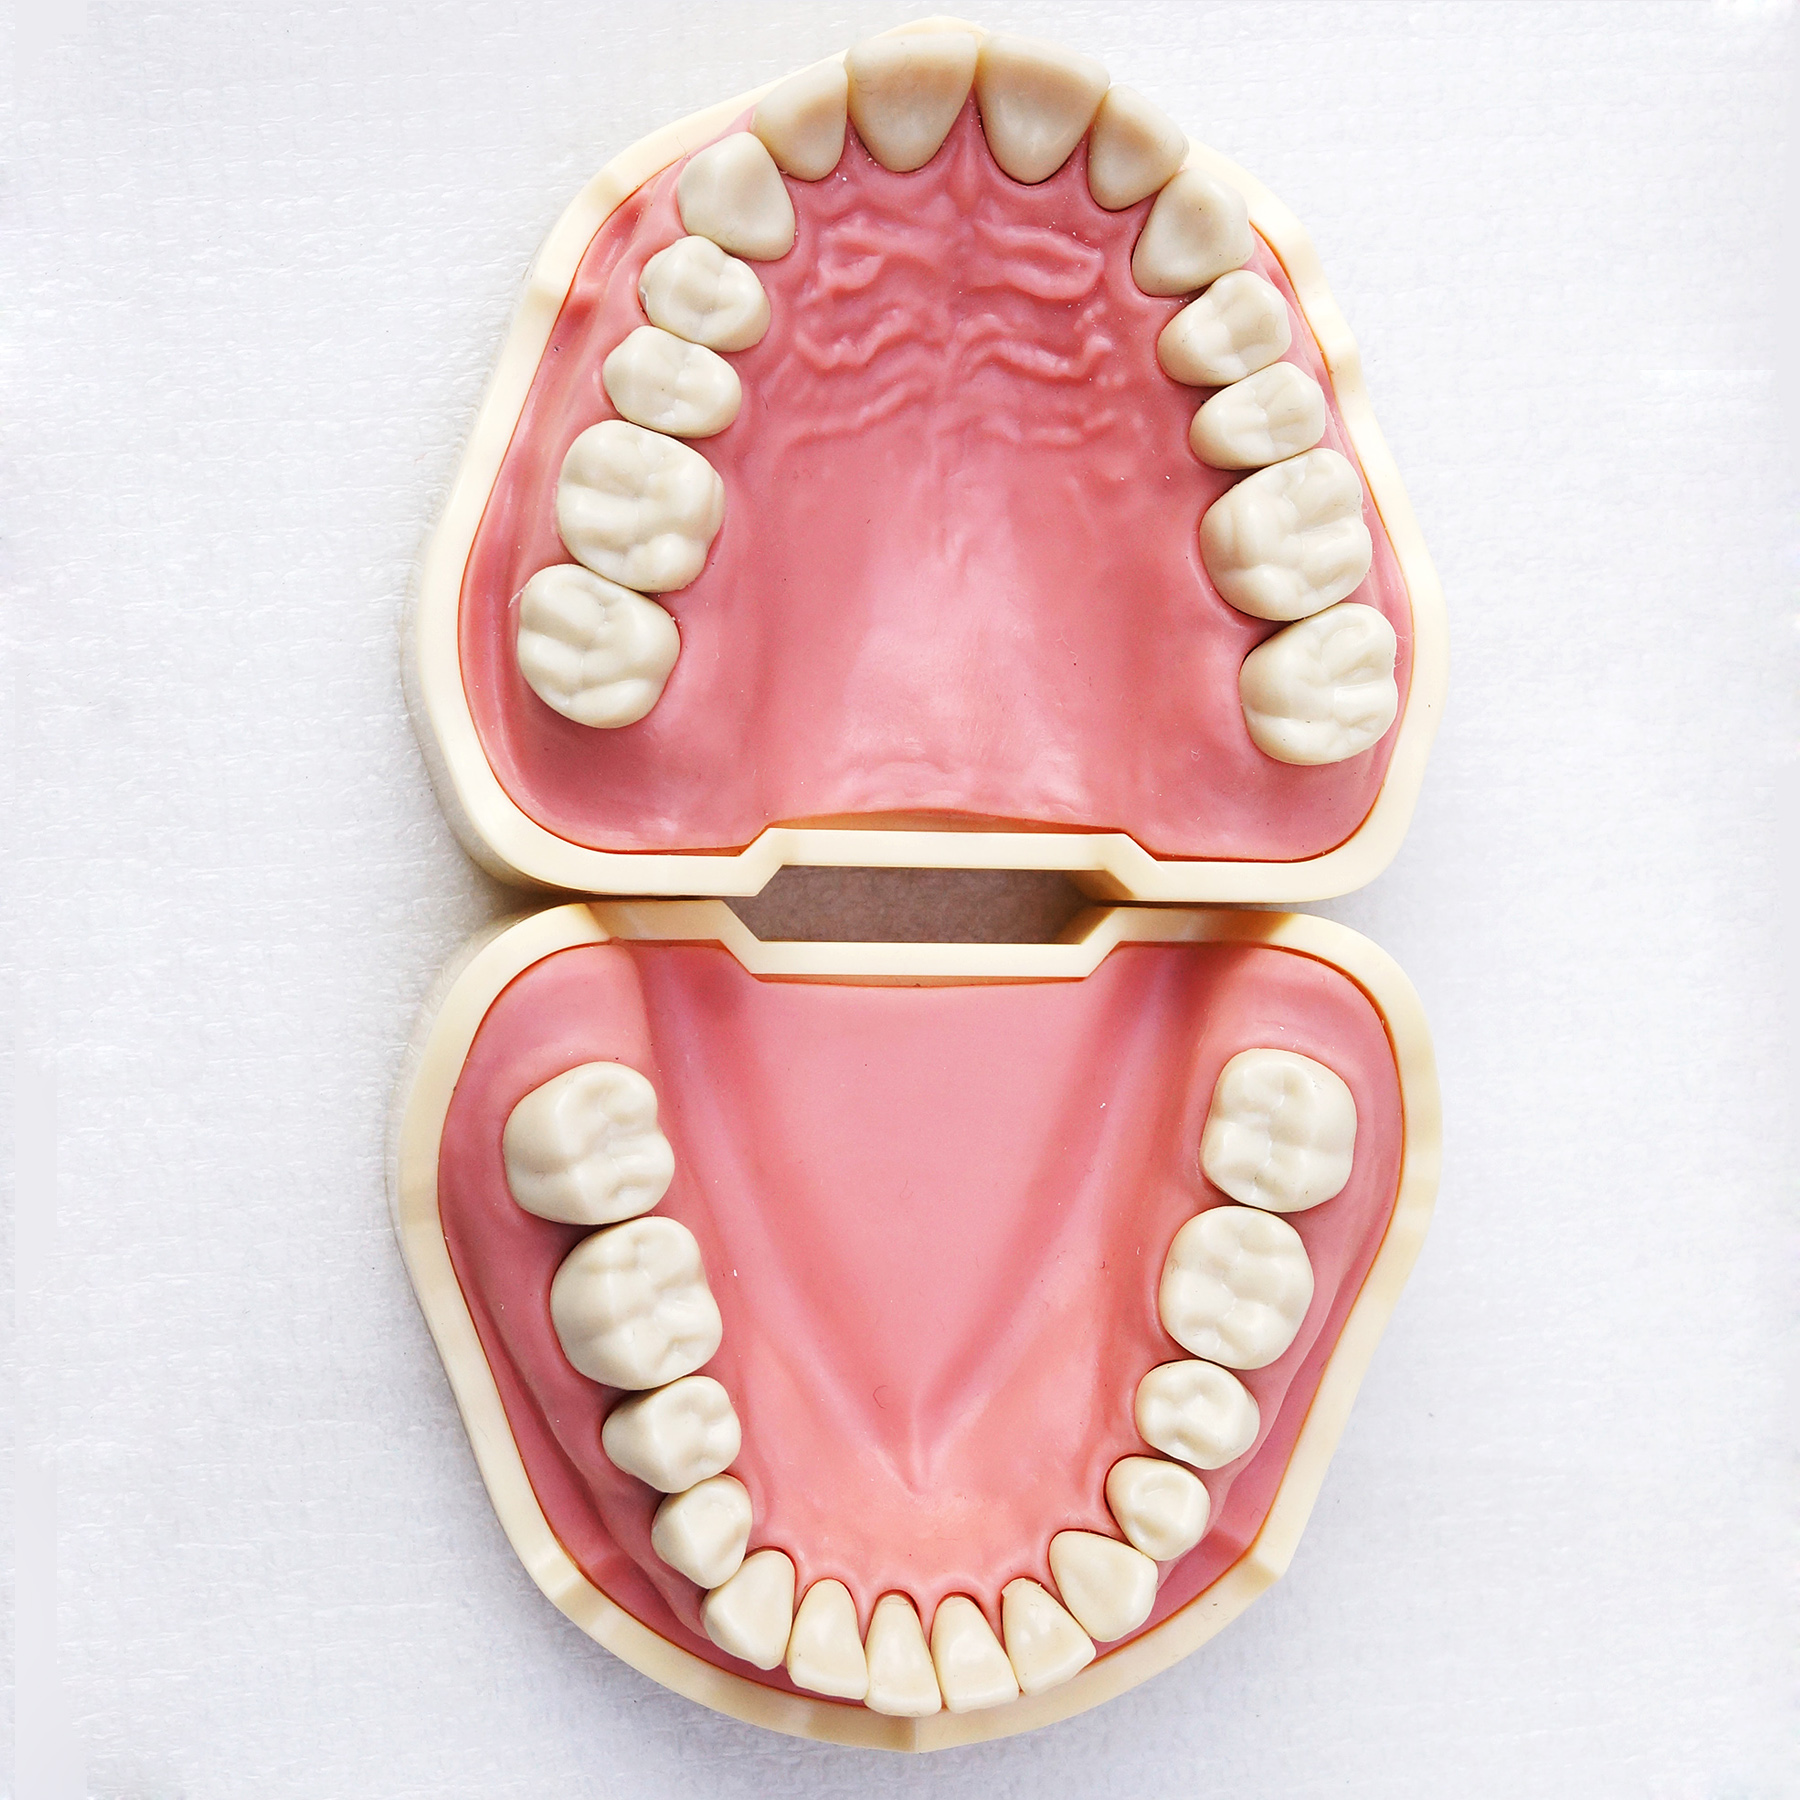 TM-A5-01 Standard Model, Dental Teeth Model Study And Teach Soft Gum BF Style 28pcs